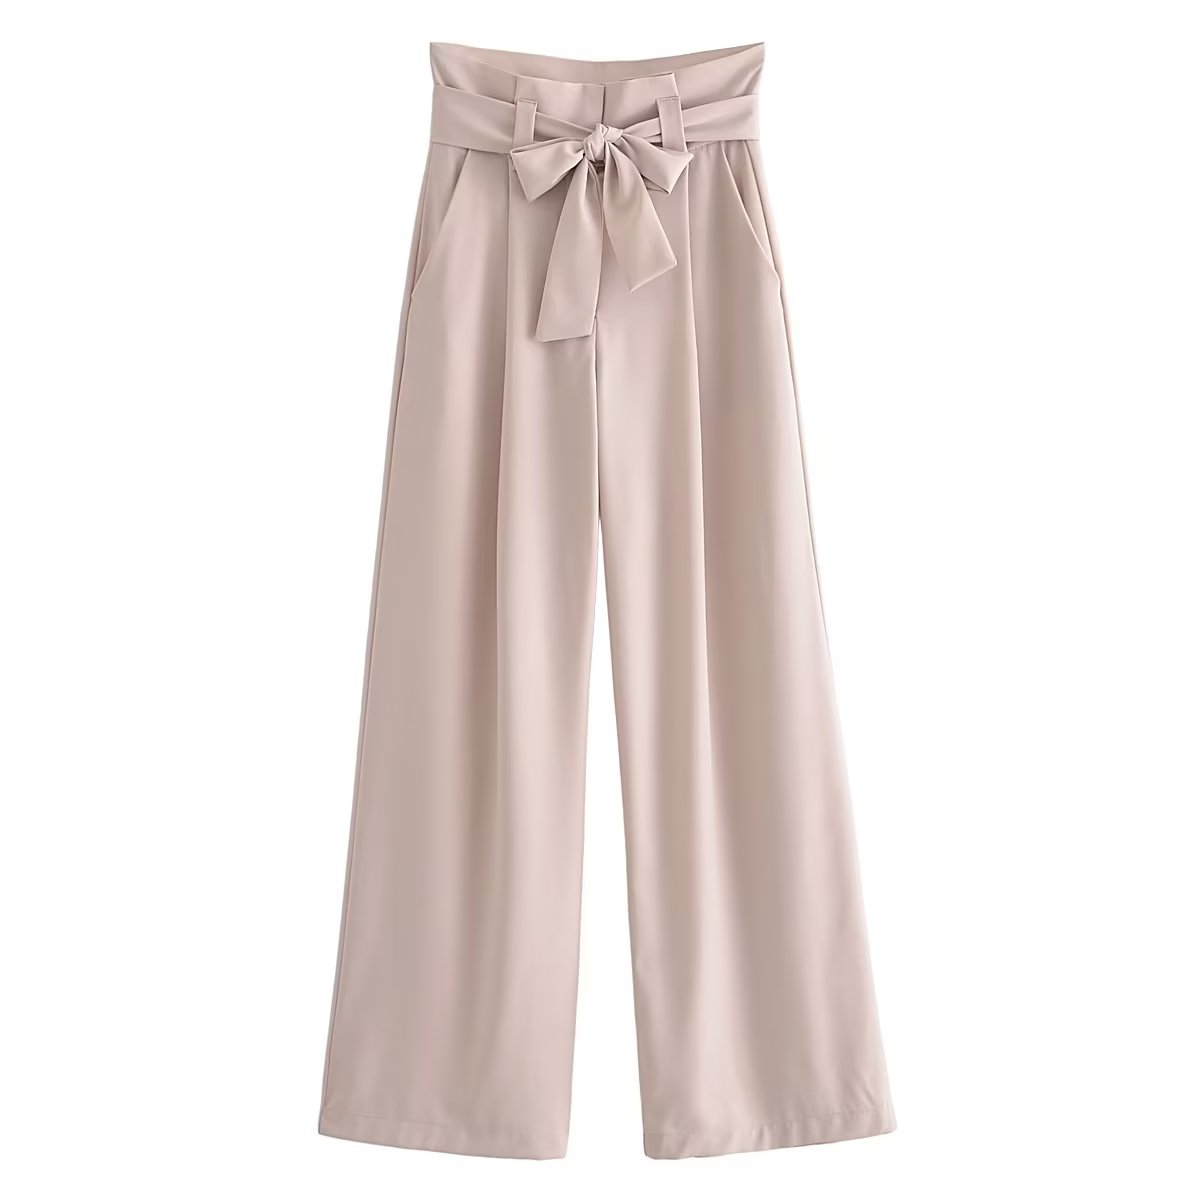 Fall Outfits | Elegant High Waist Lightest Pink Pants